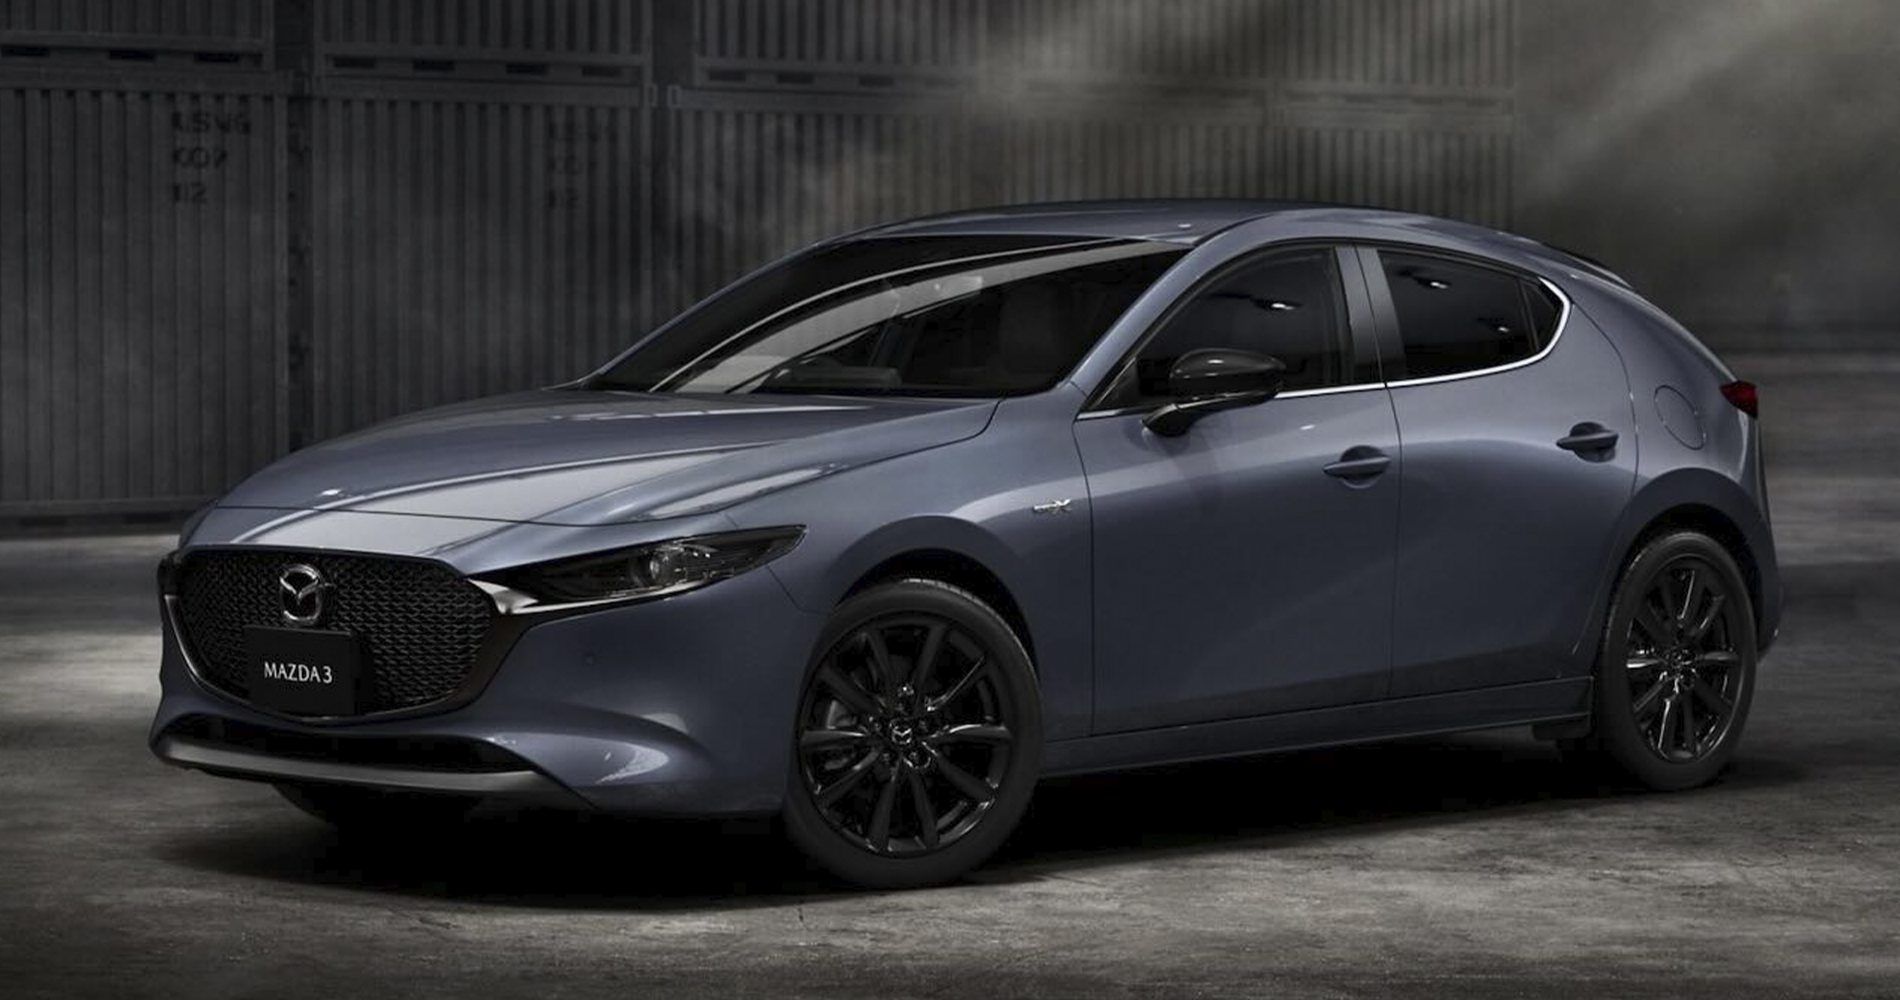 2022 gray Mazda 3 hatchback on industrial setting